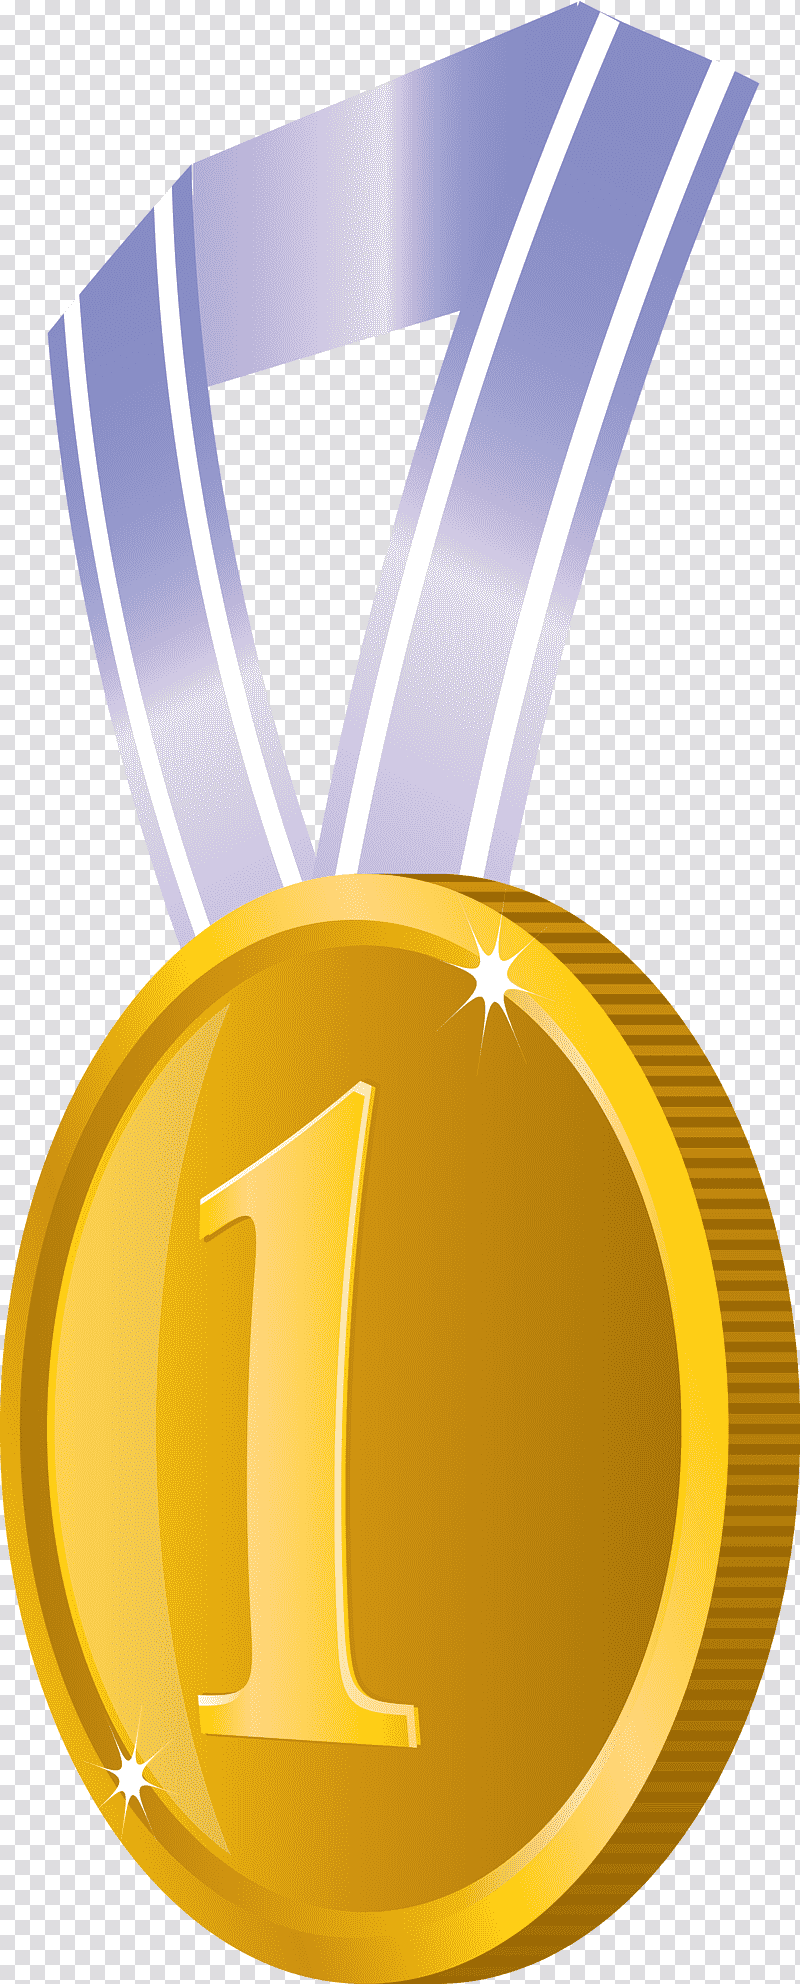 Gold Badge No 1 Badge Award Gold Badge, Medal, Yellow, Gold Medal, Orange, Silver, Bronze transparent background PNG clipart